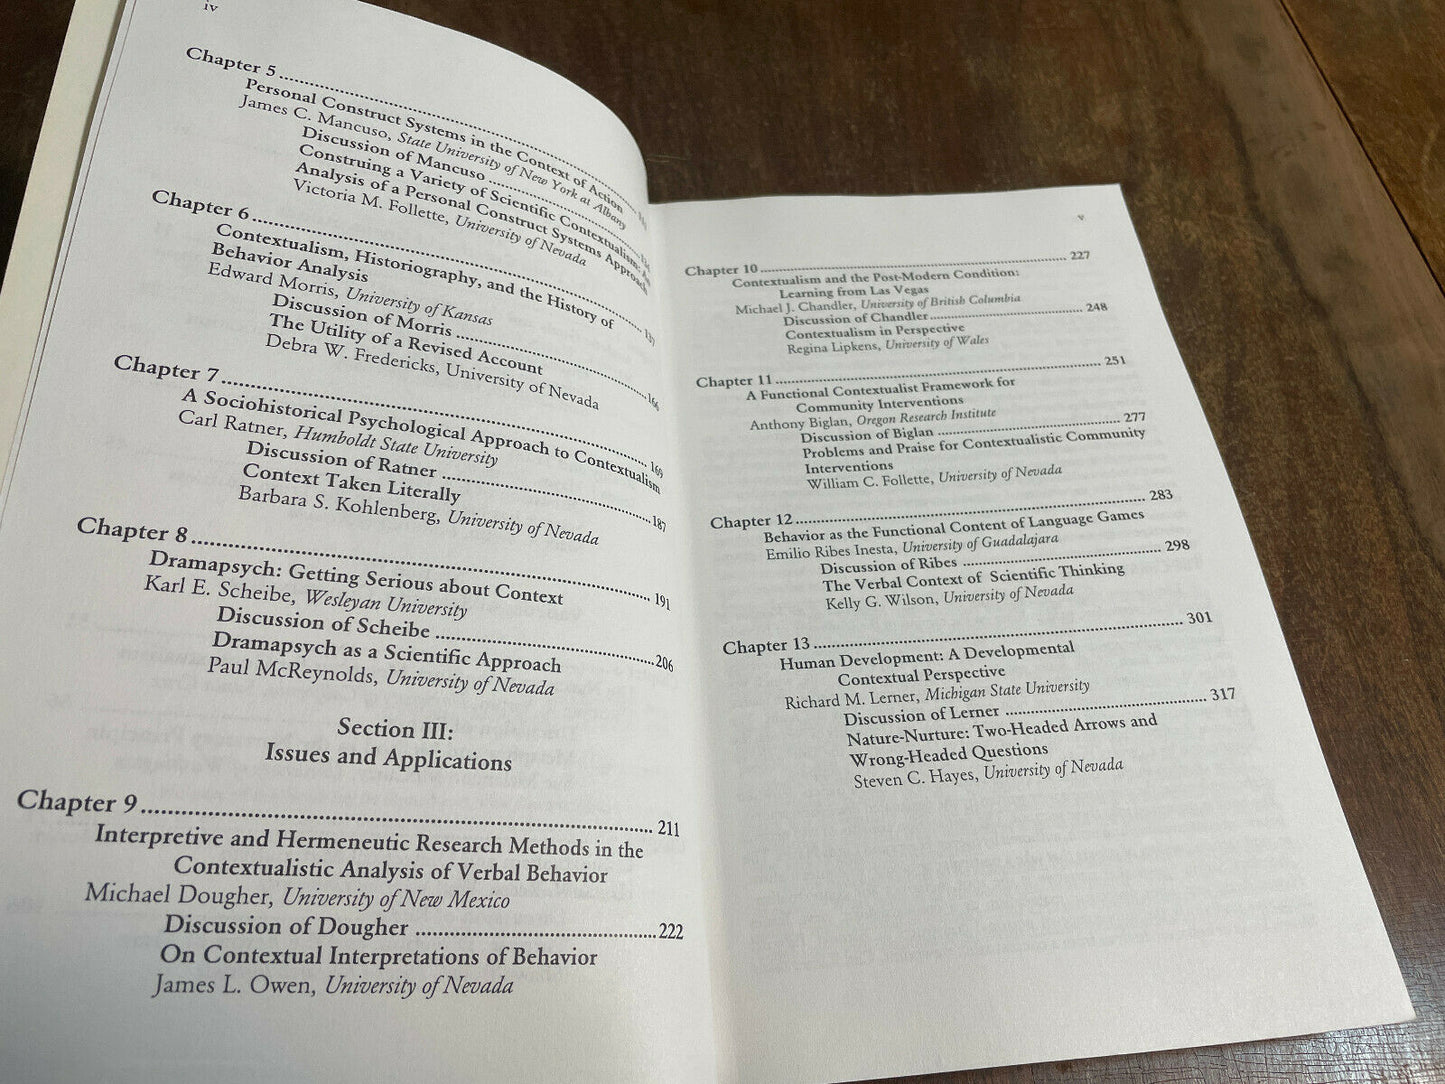 Varieties of Scientific Contextualism Editied by Steven C. Hayes PB (Z1)